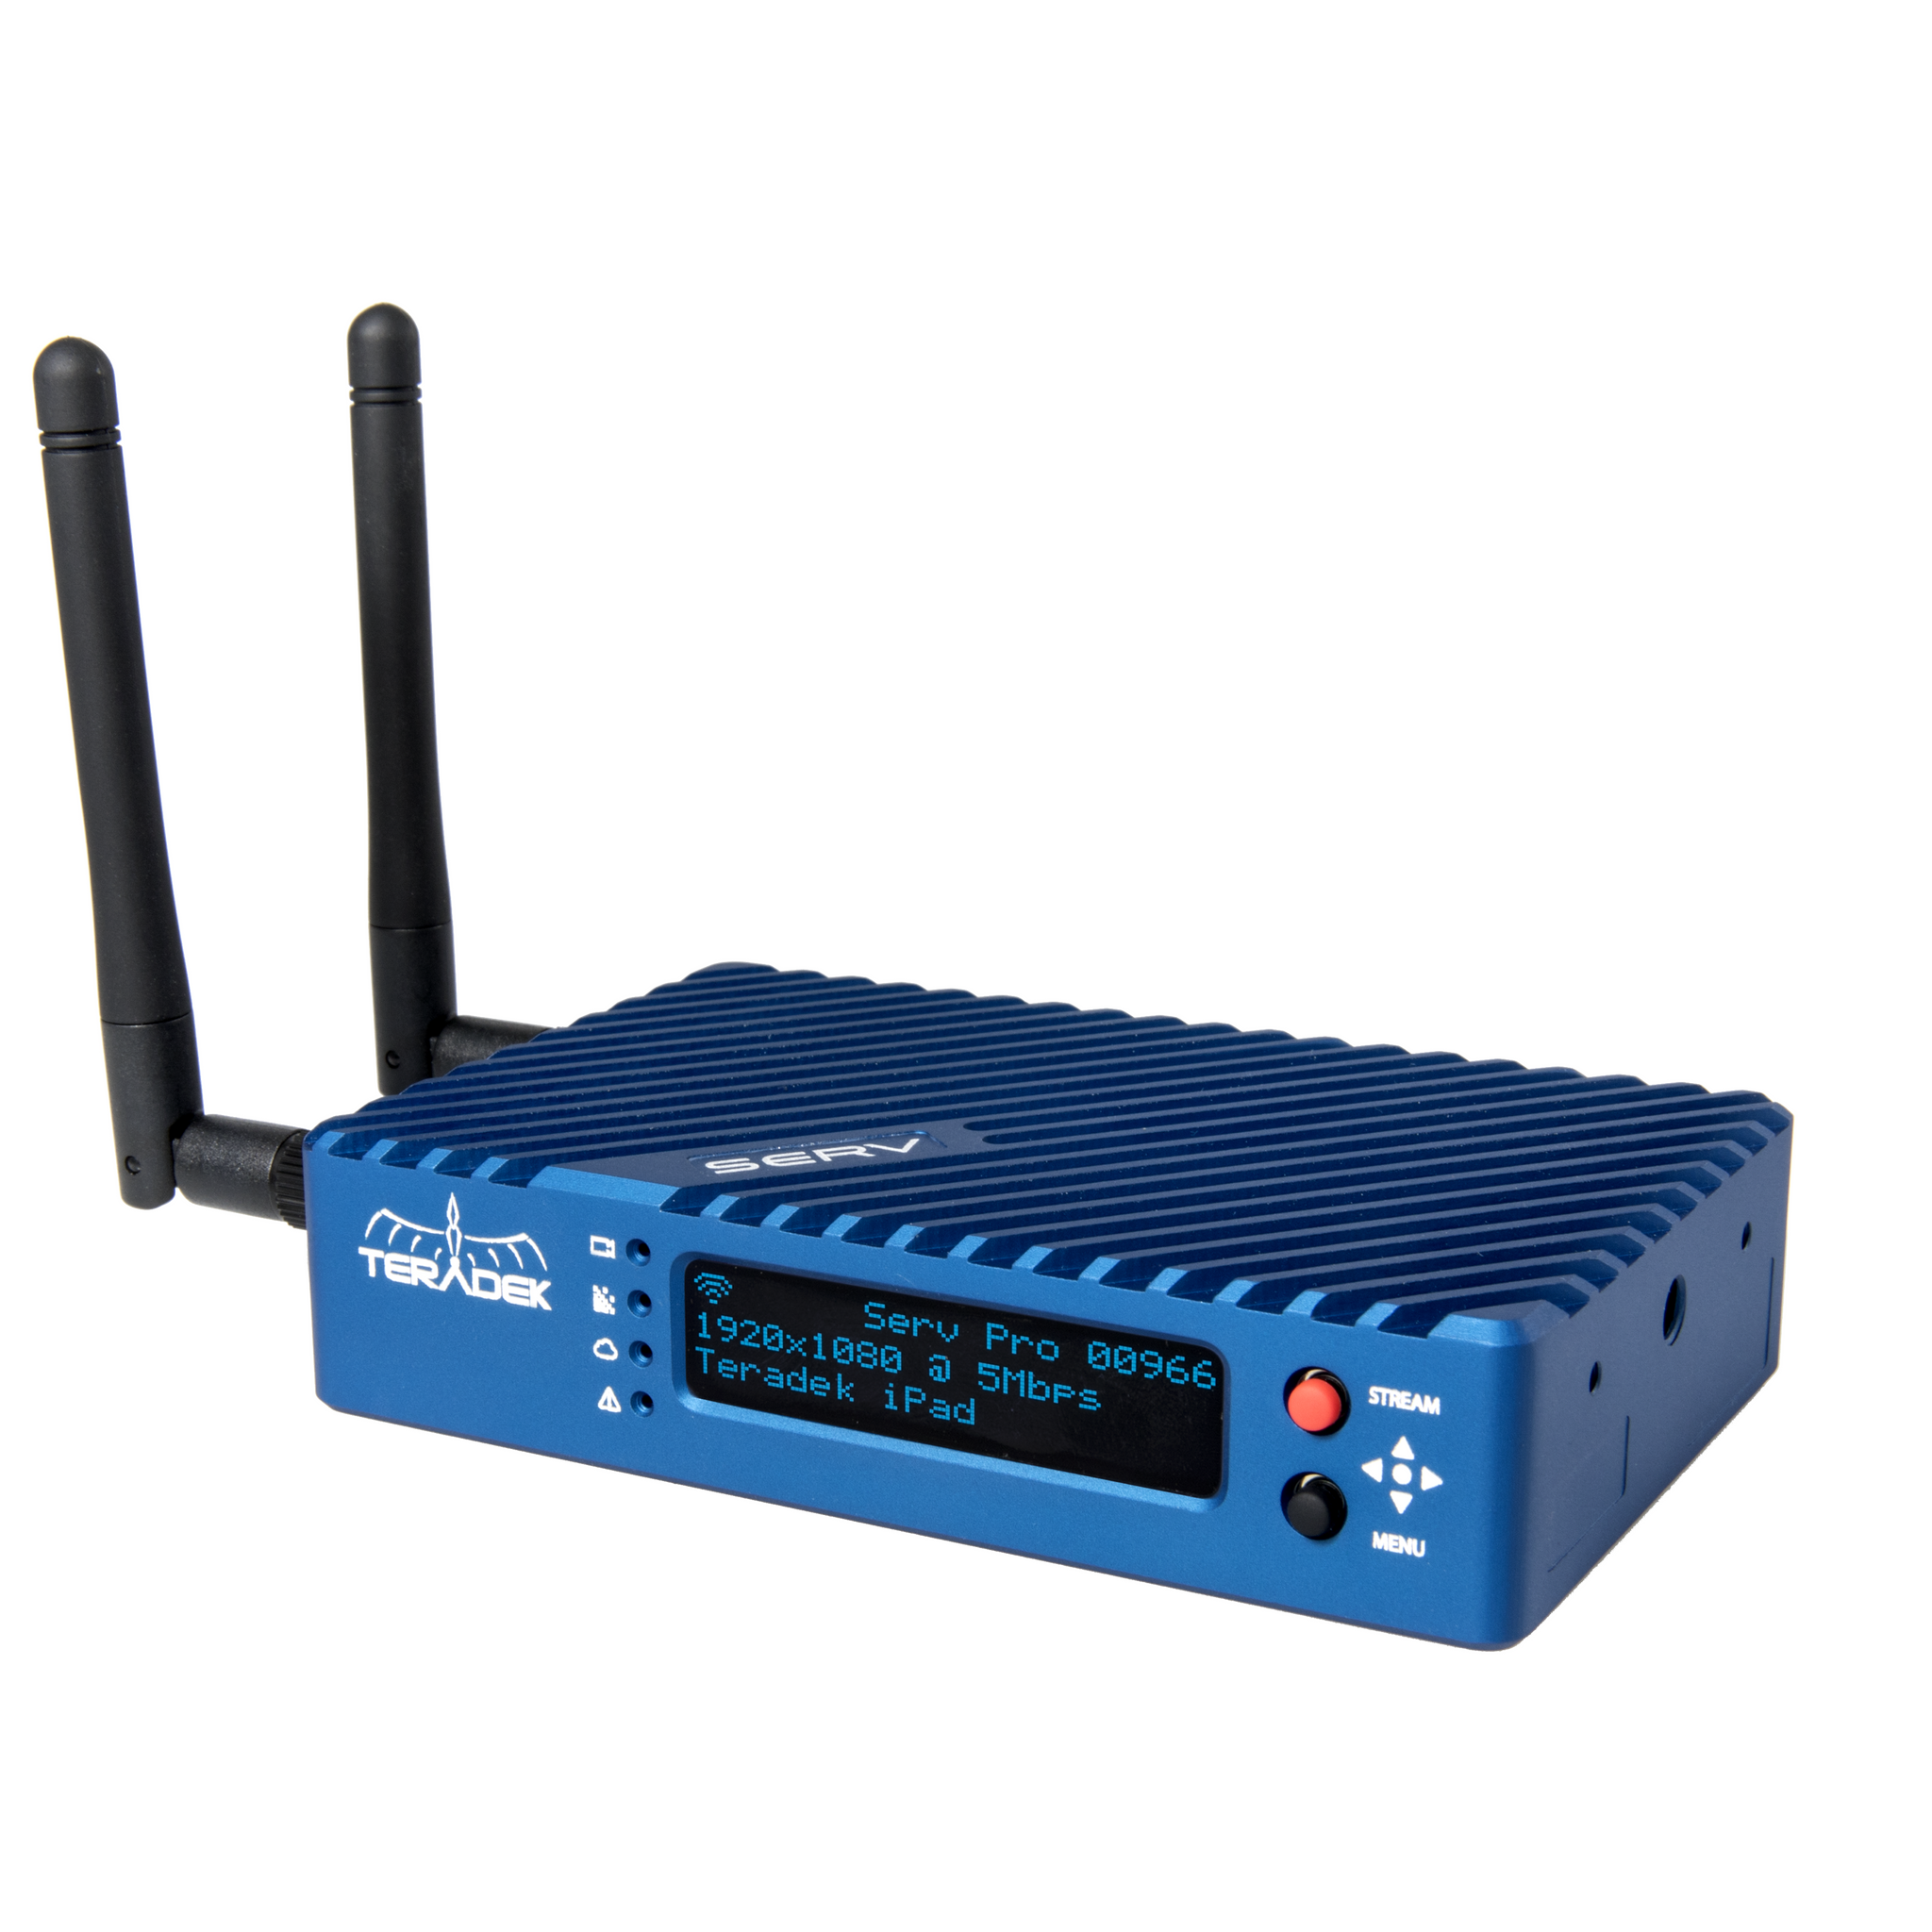 Link AX Wifi Router/Access Point – Teradek